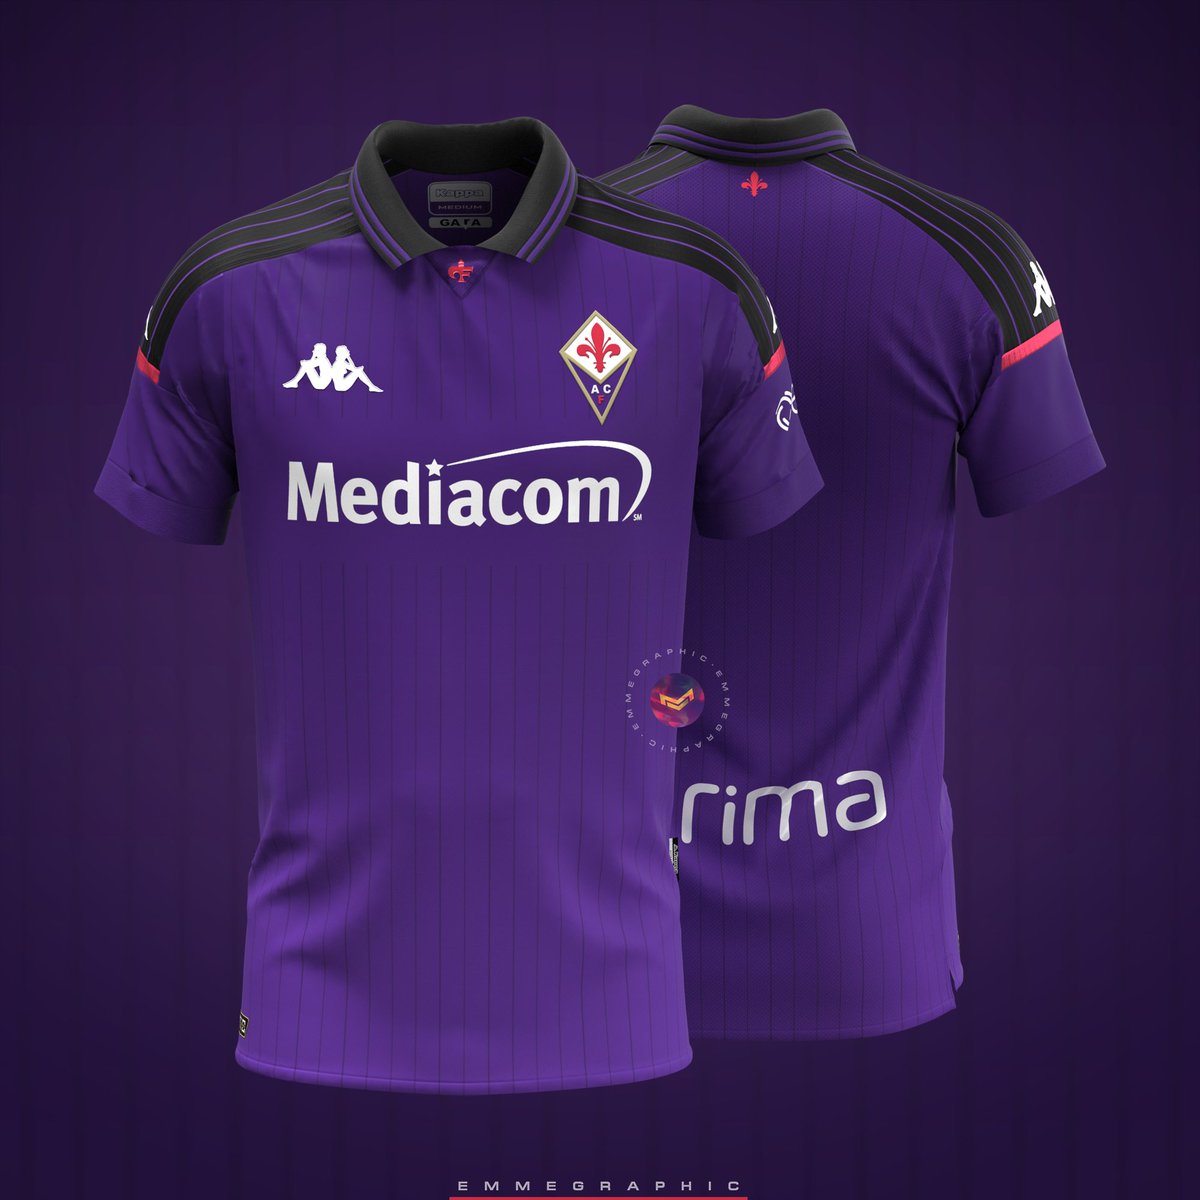 emmegraphic on Twitter: "| ACF Fiorentina | Kappa | Home shirt concept 🟣⚜️  #Fiorentina #Kappa #conceptkit #kitdesign https://t.co/PrUTNE2dYG" / Twitter